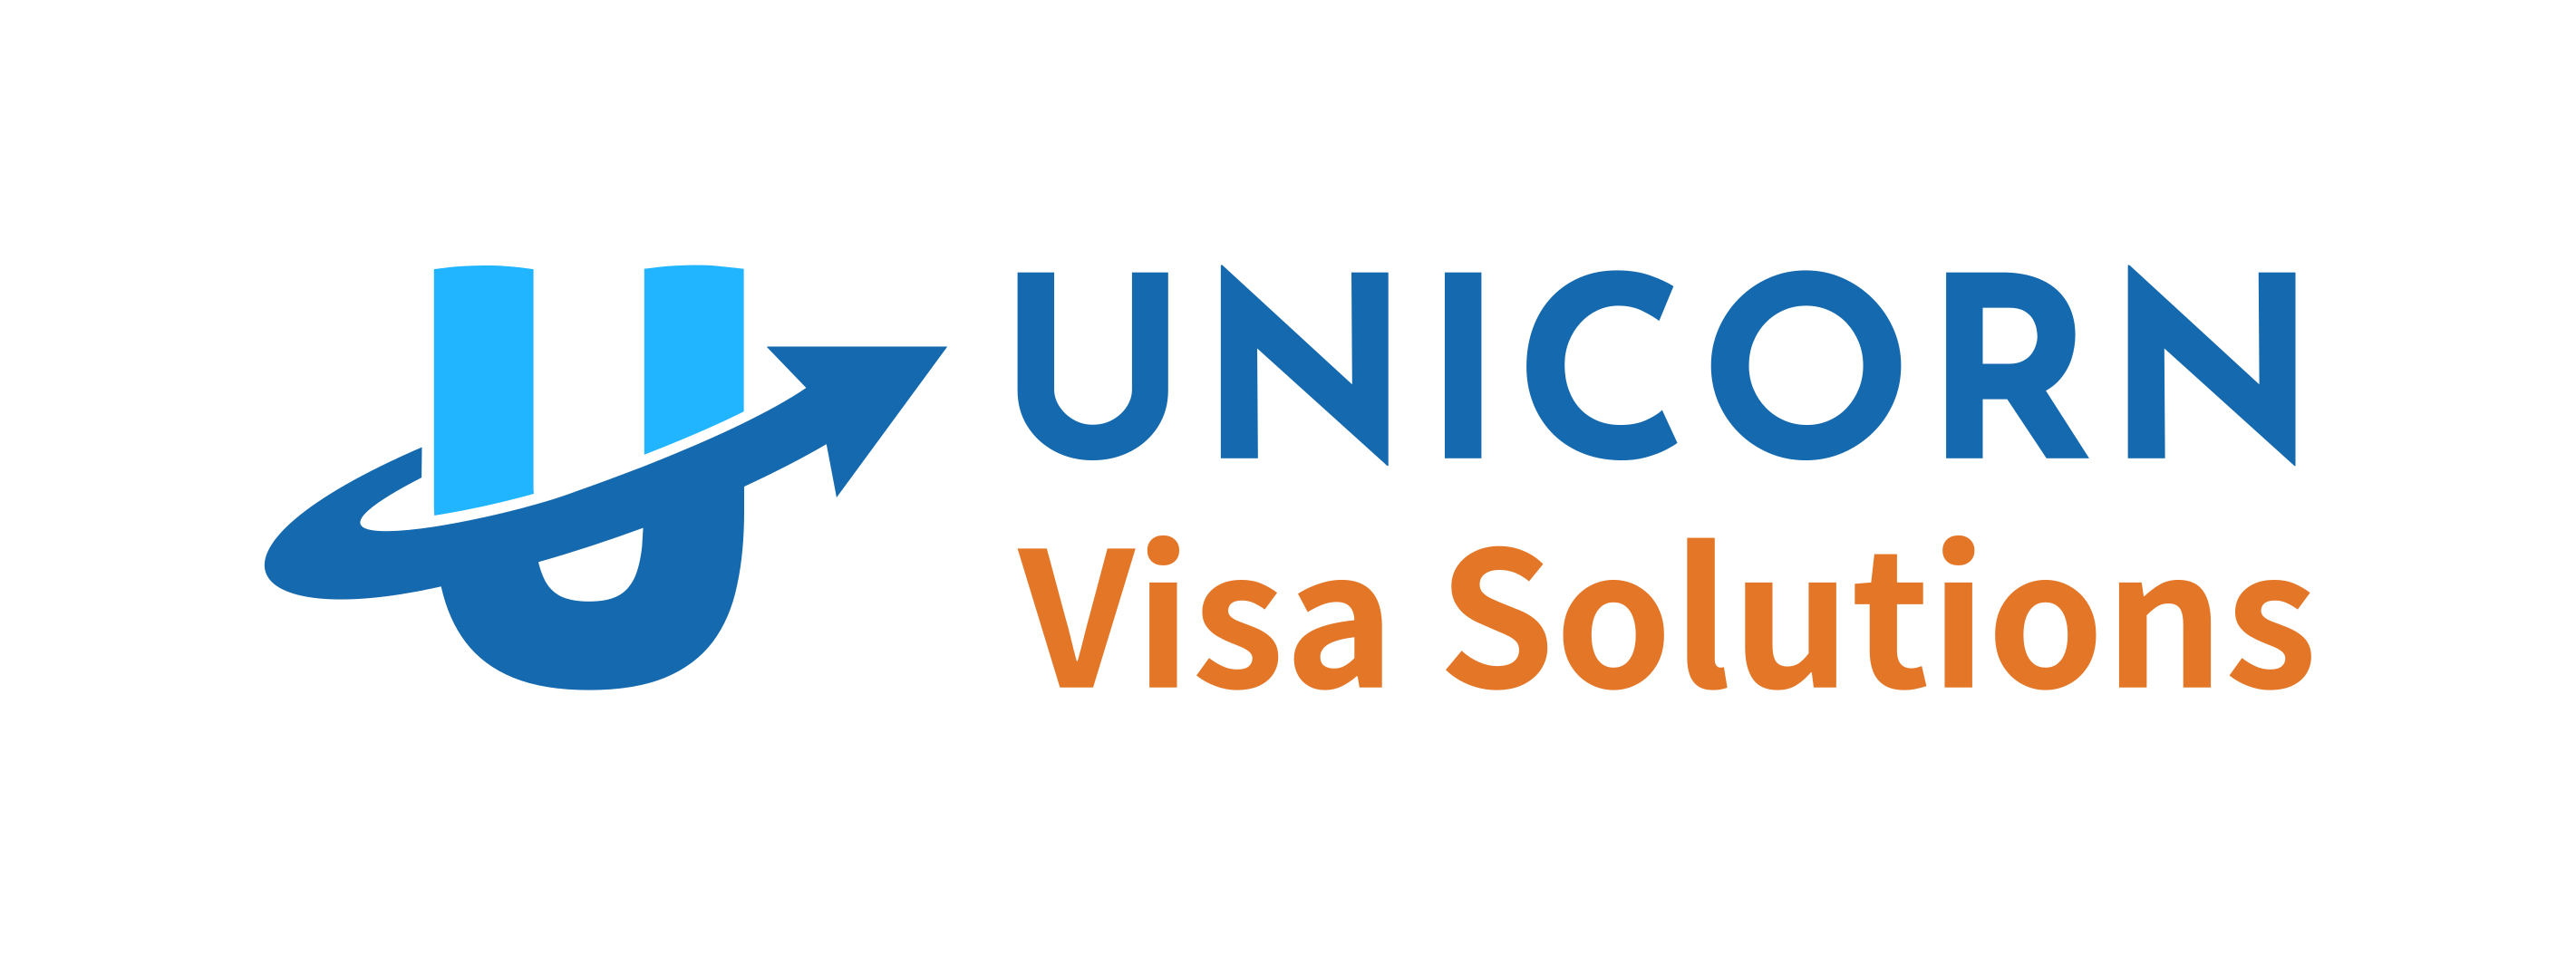 Unicorn Visa Solution Visas